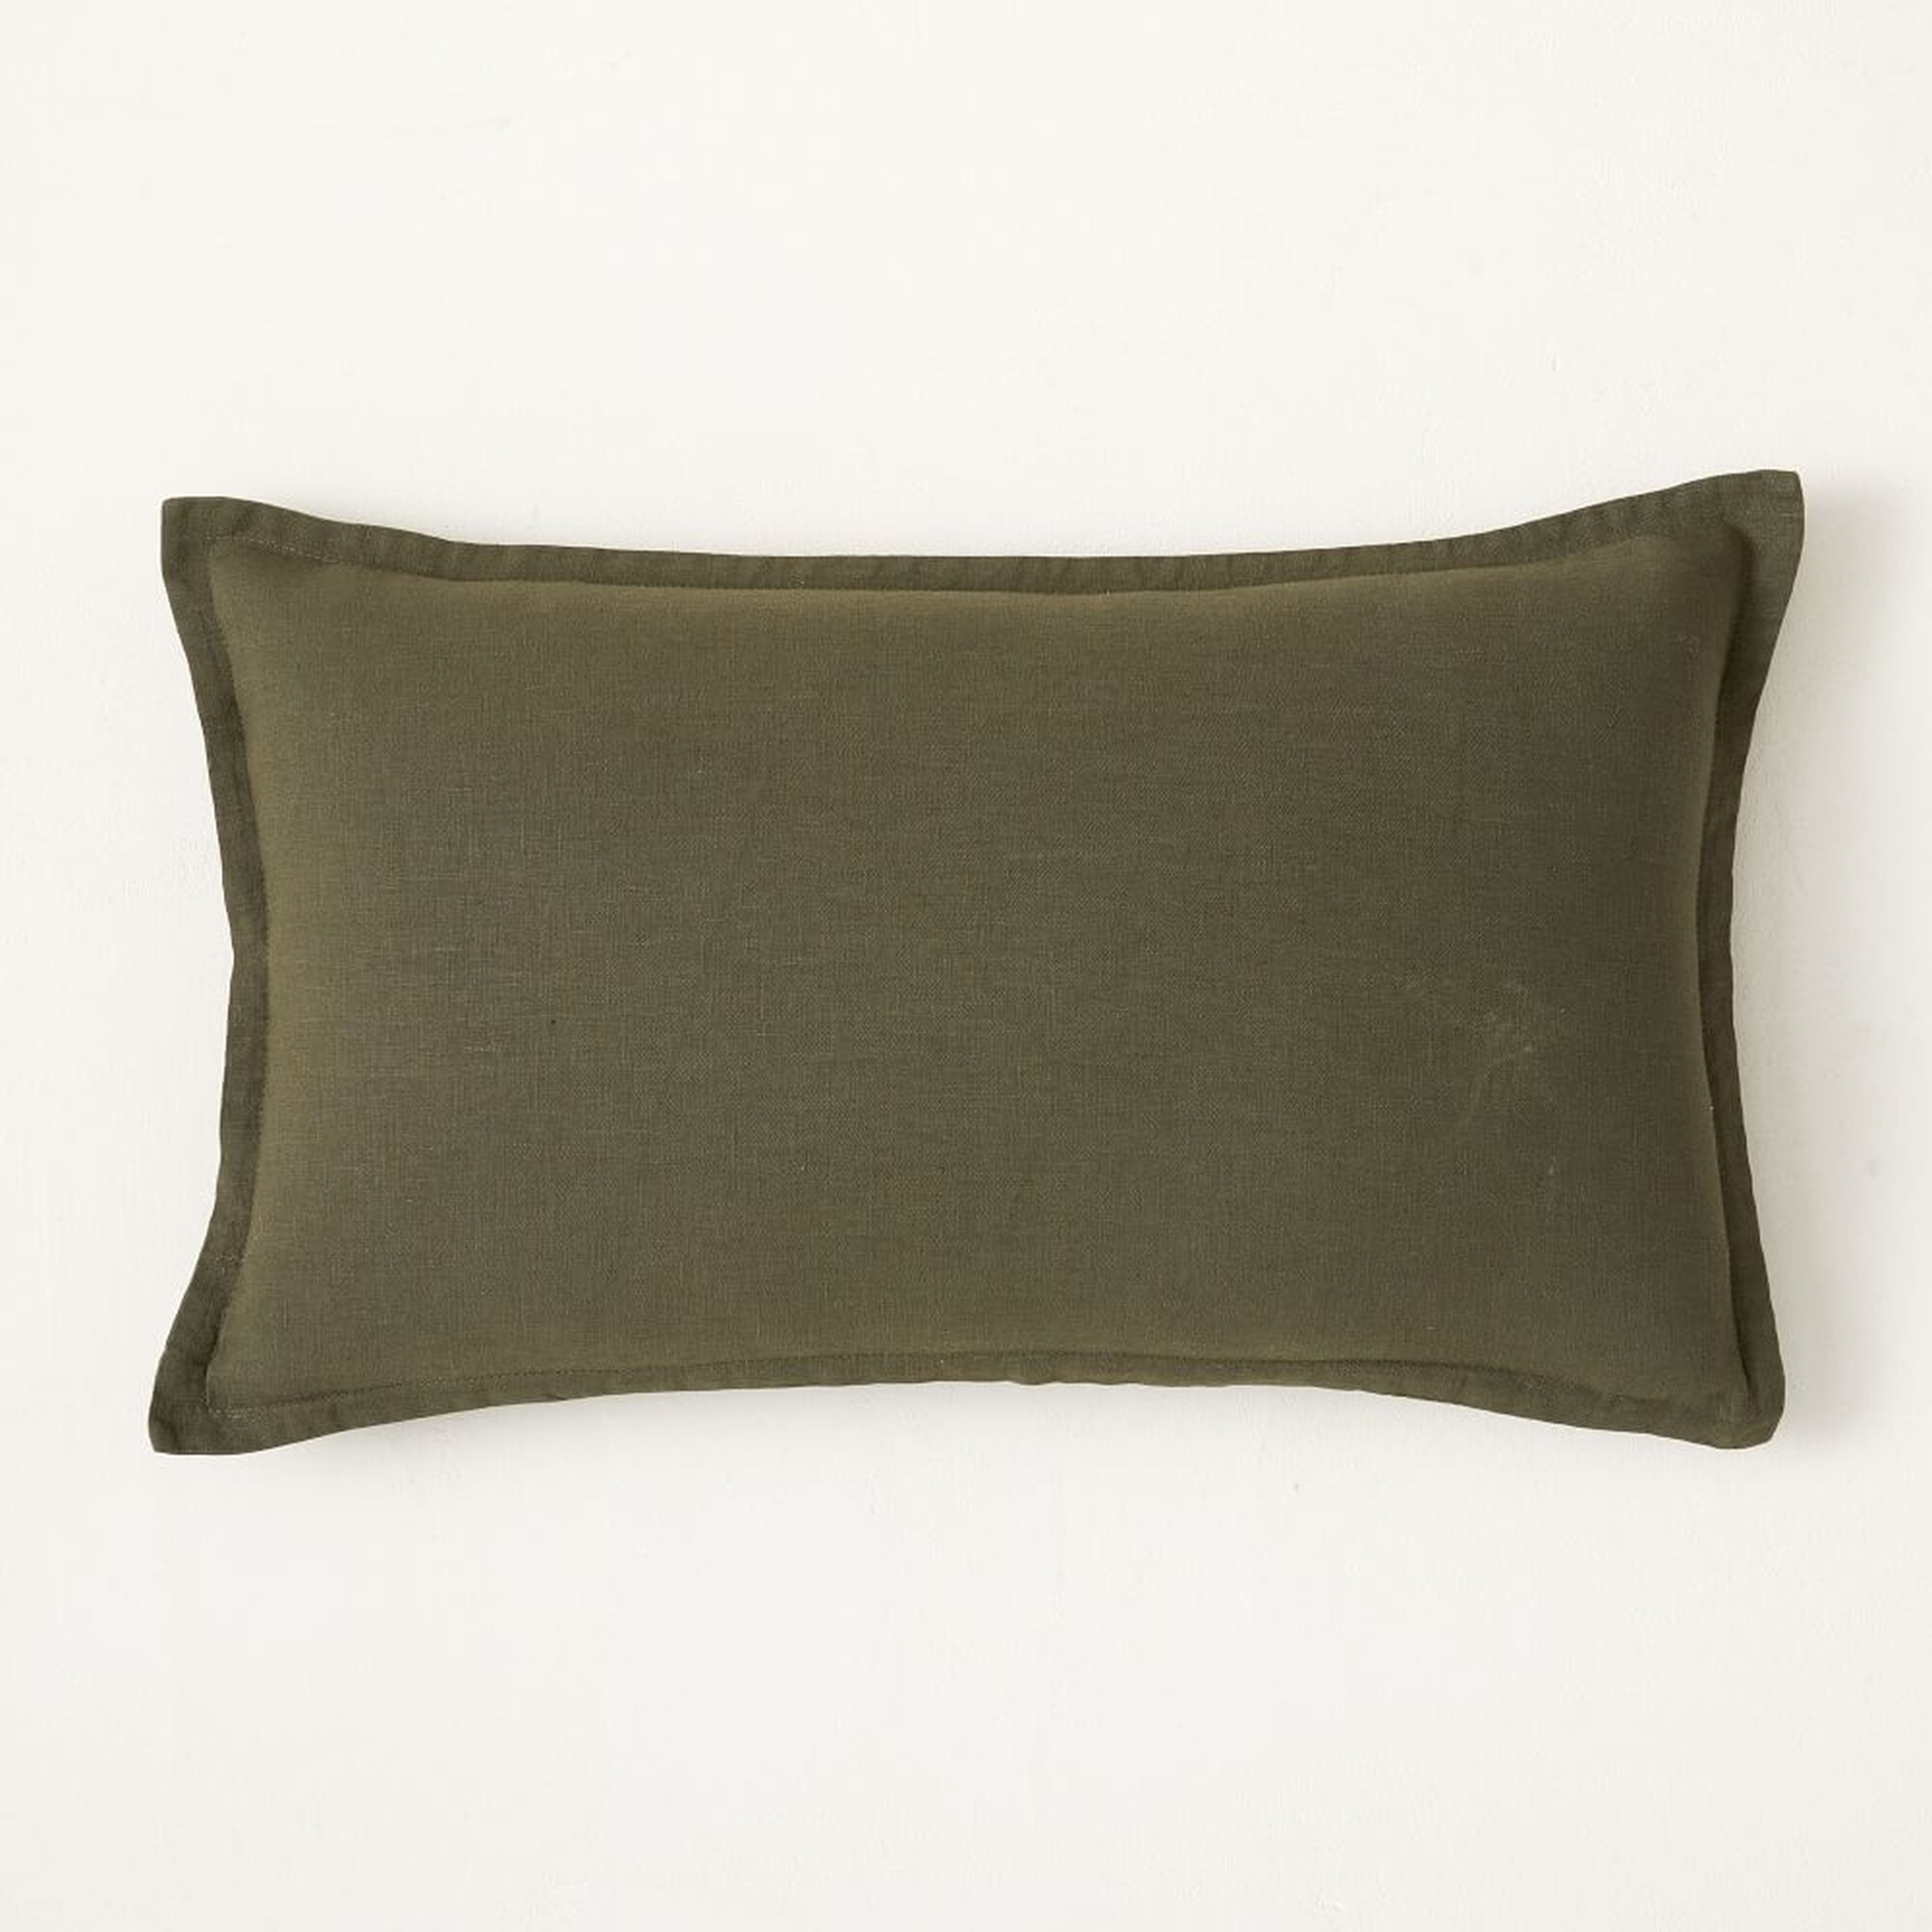 European Flax Linen Pillow Cover, 12"x21", Dark Olive, Set of 2 - West Elm